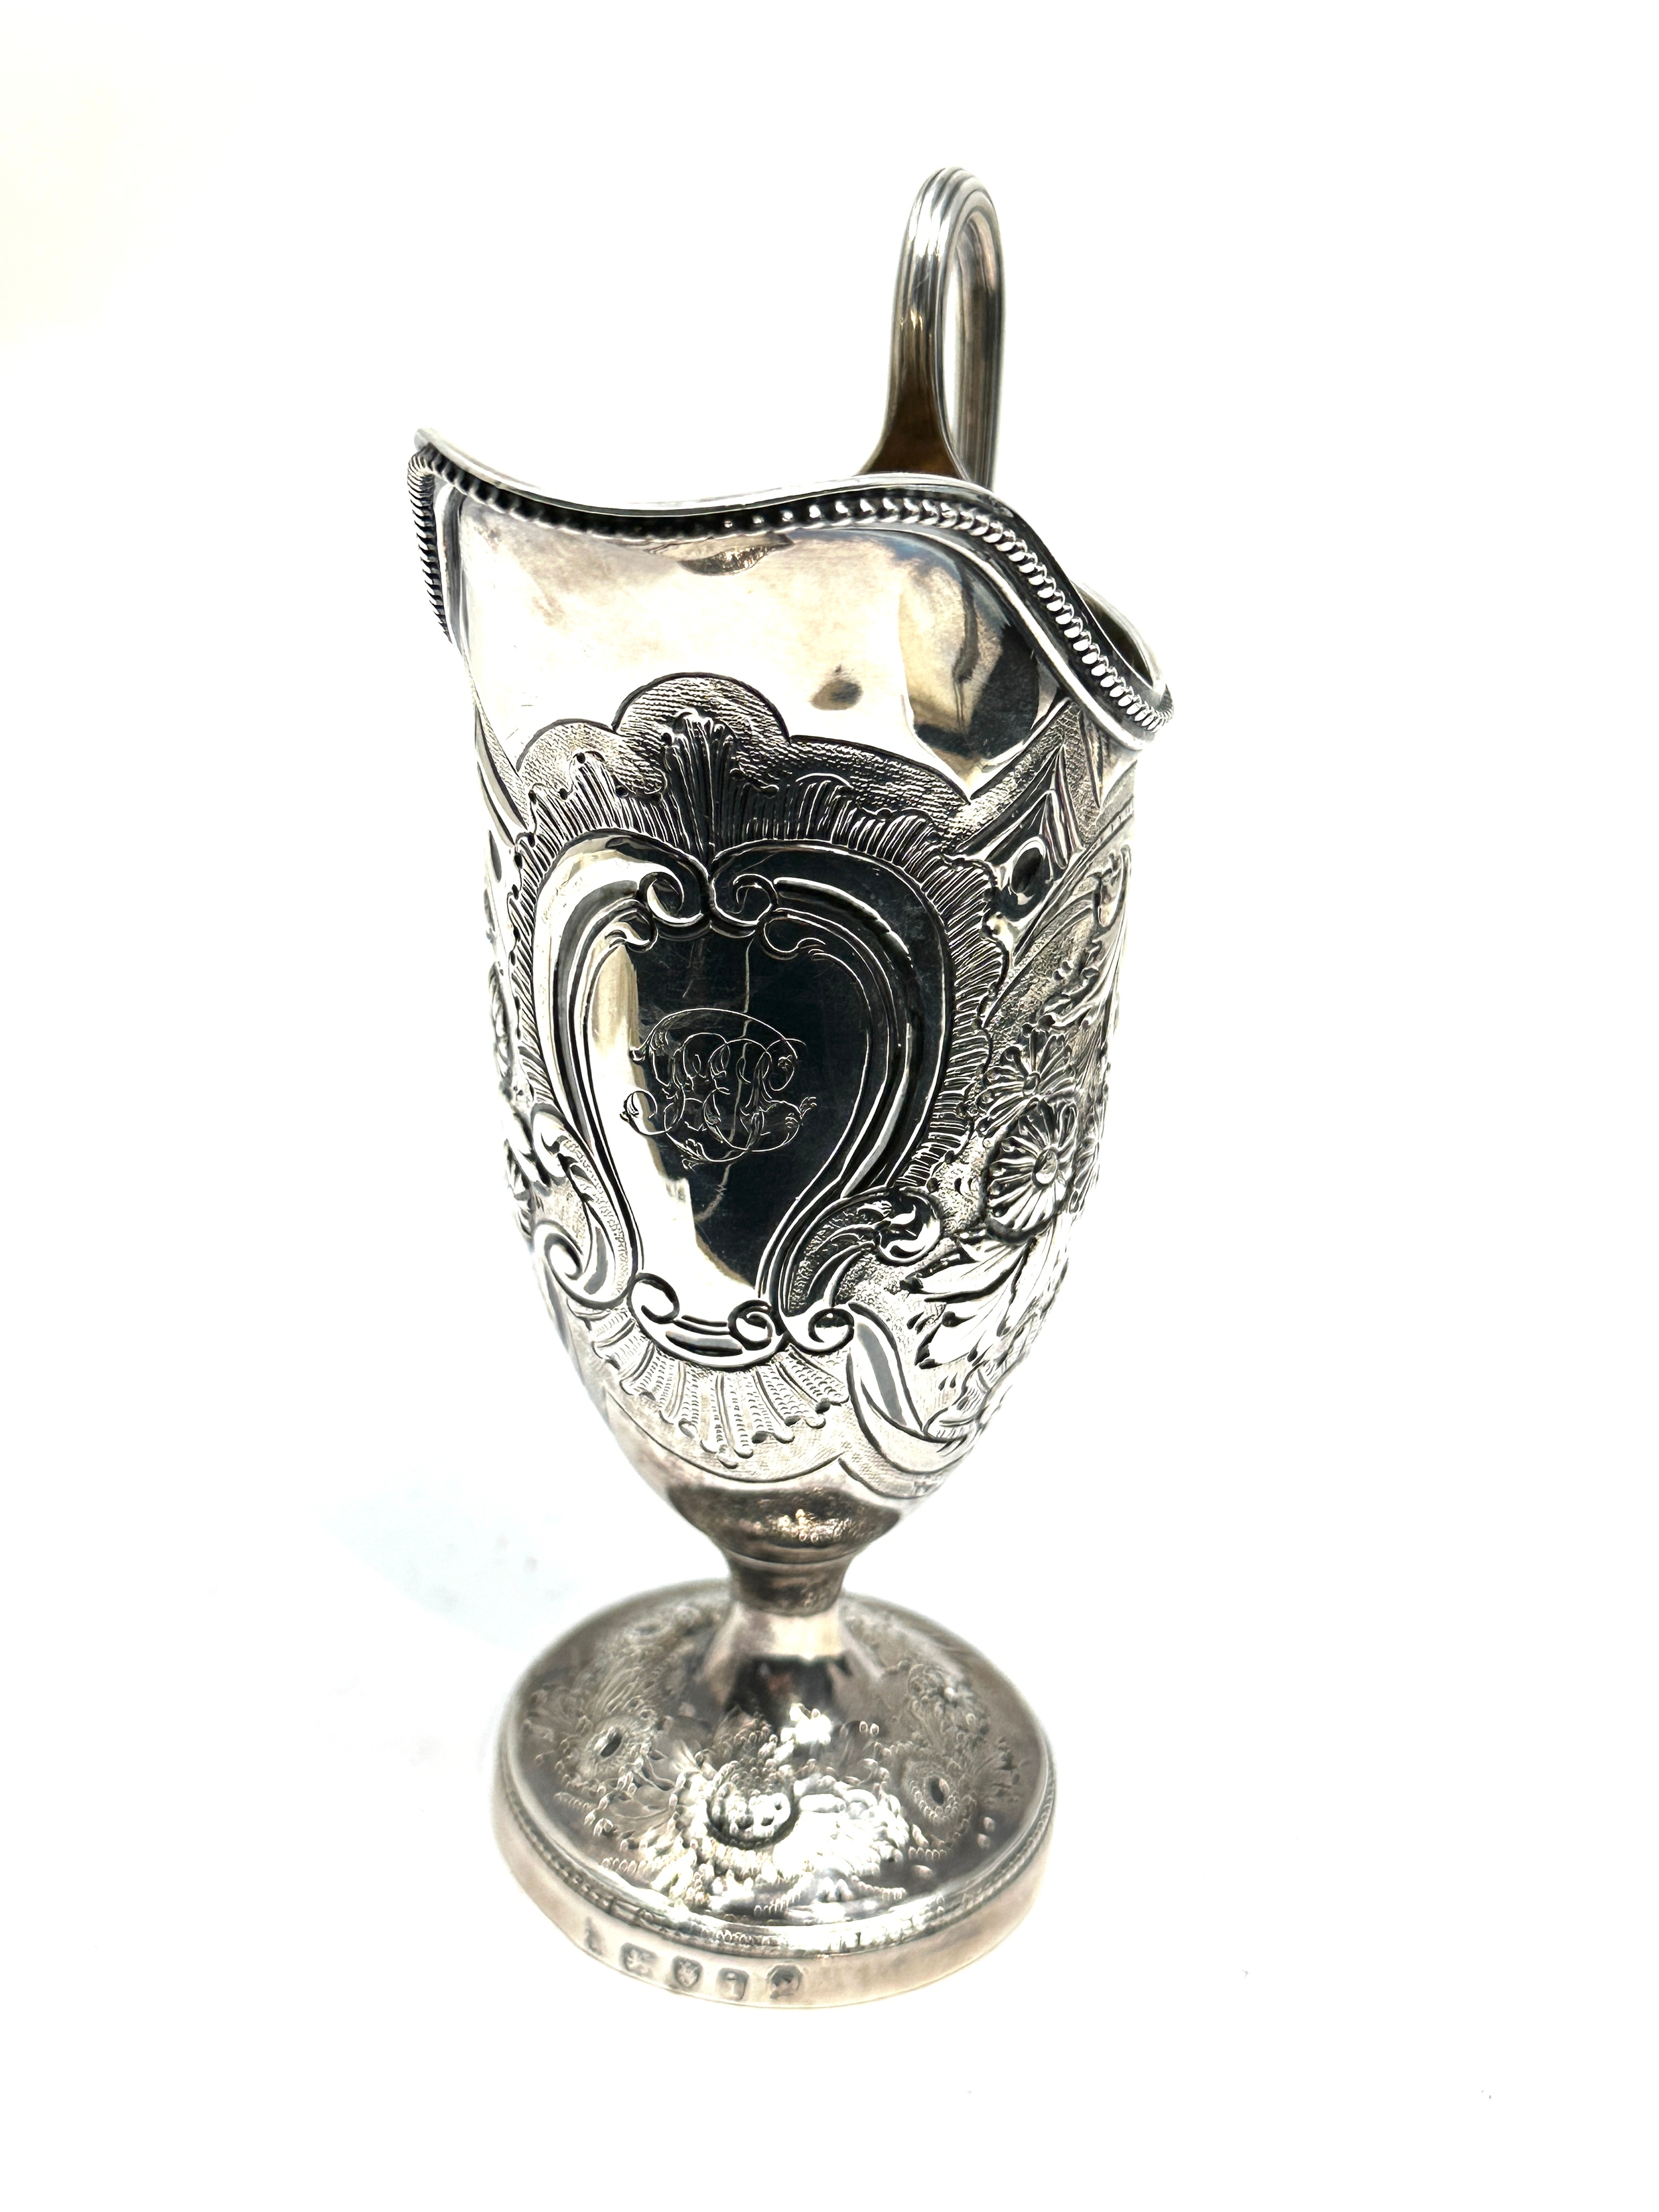 fine heavy georgian silver cream jug london silver hallmarks weight approx 200g - Image 2 of 6